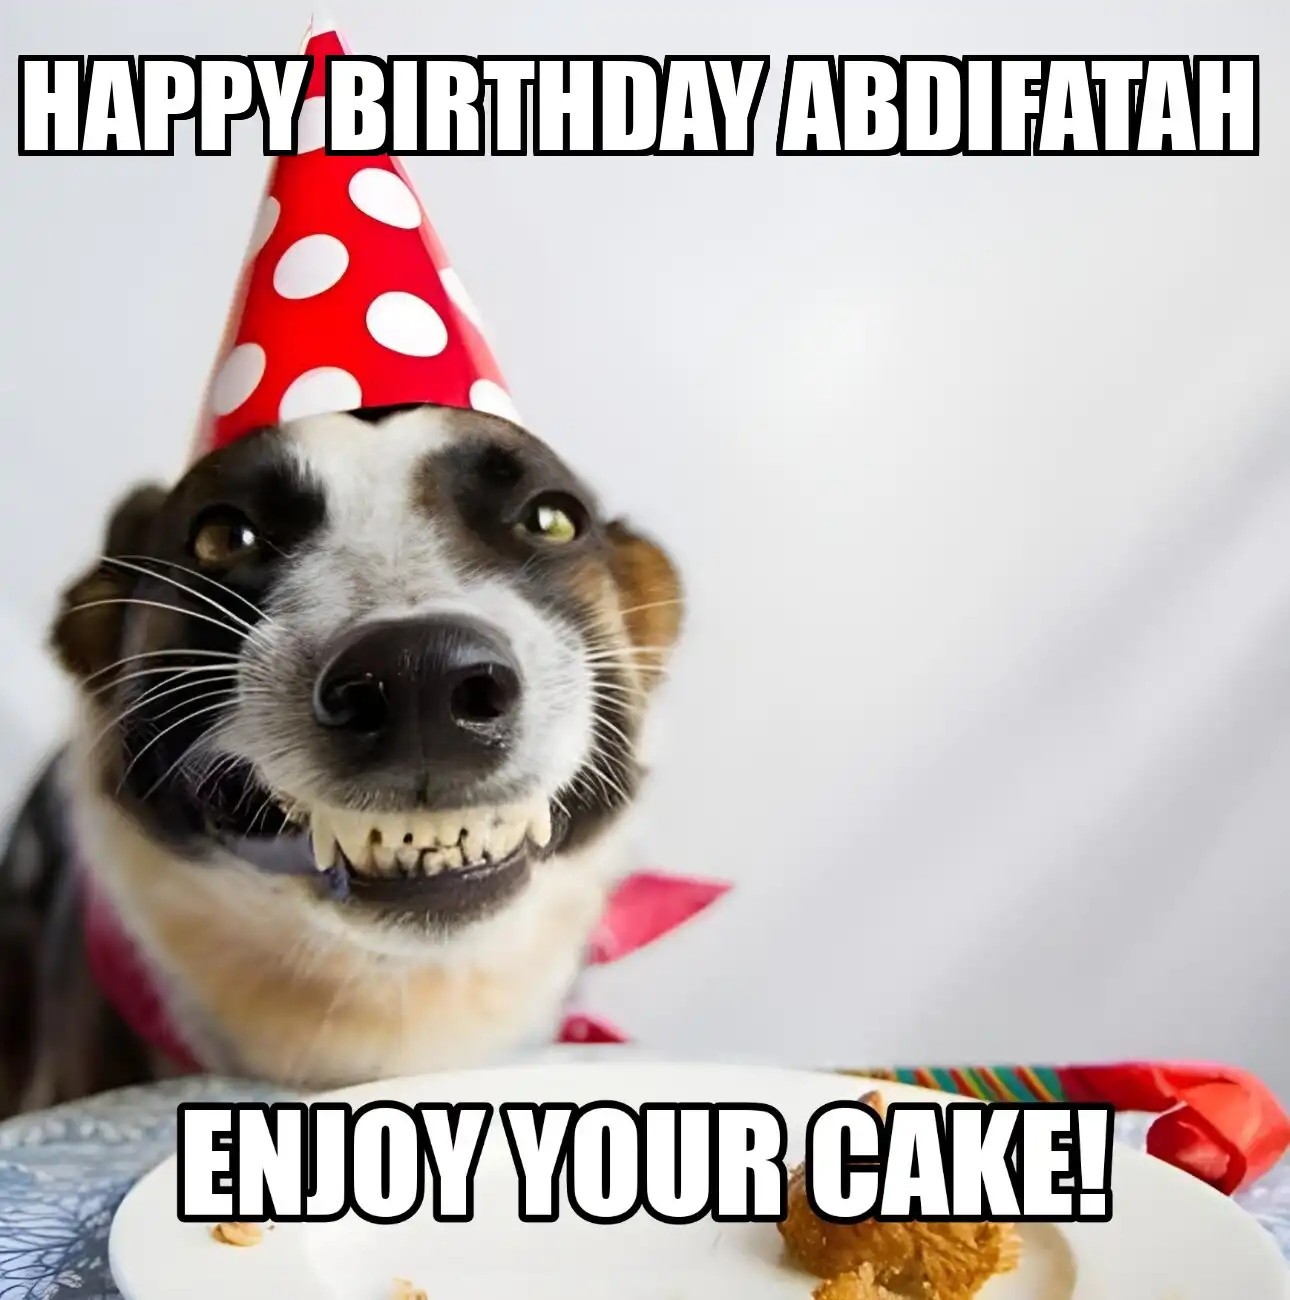 Happy Birthday Abdifatah Enjoy Your Cake Dog Meme